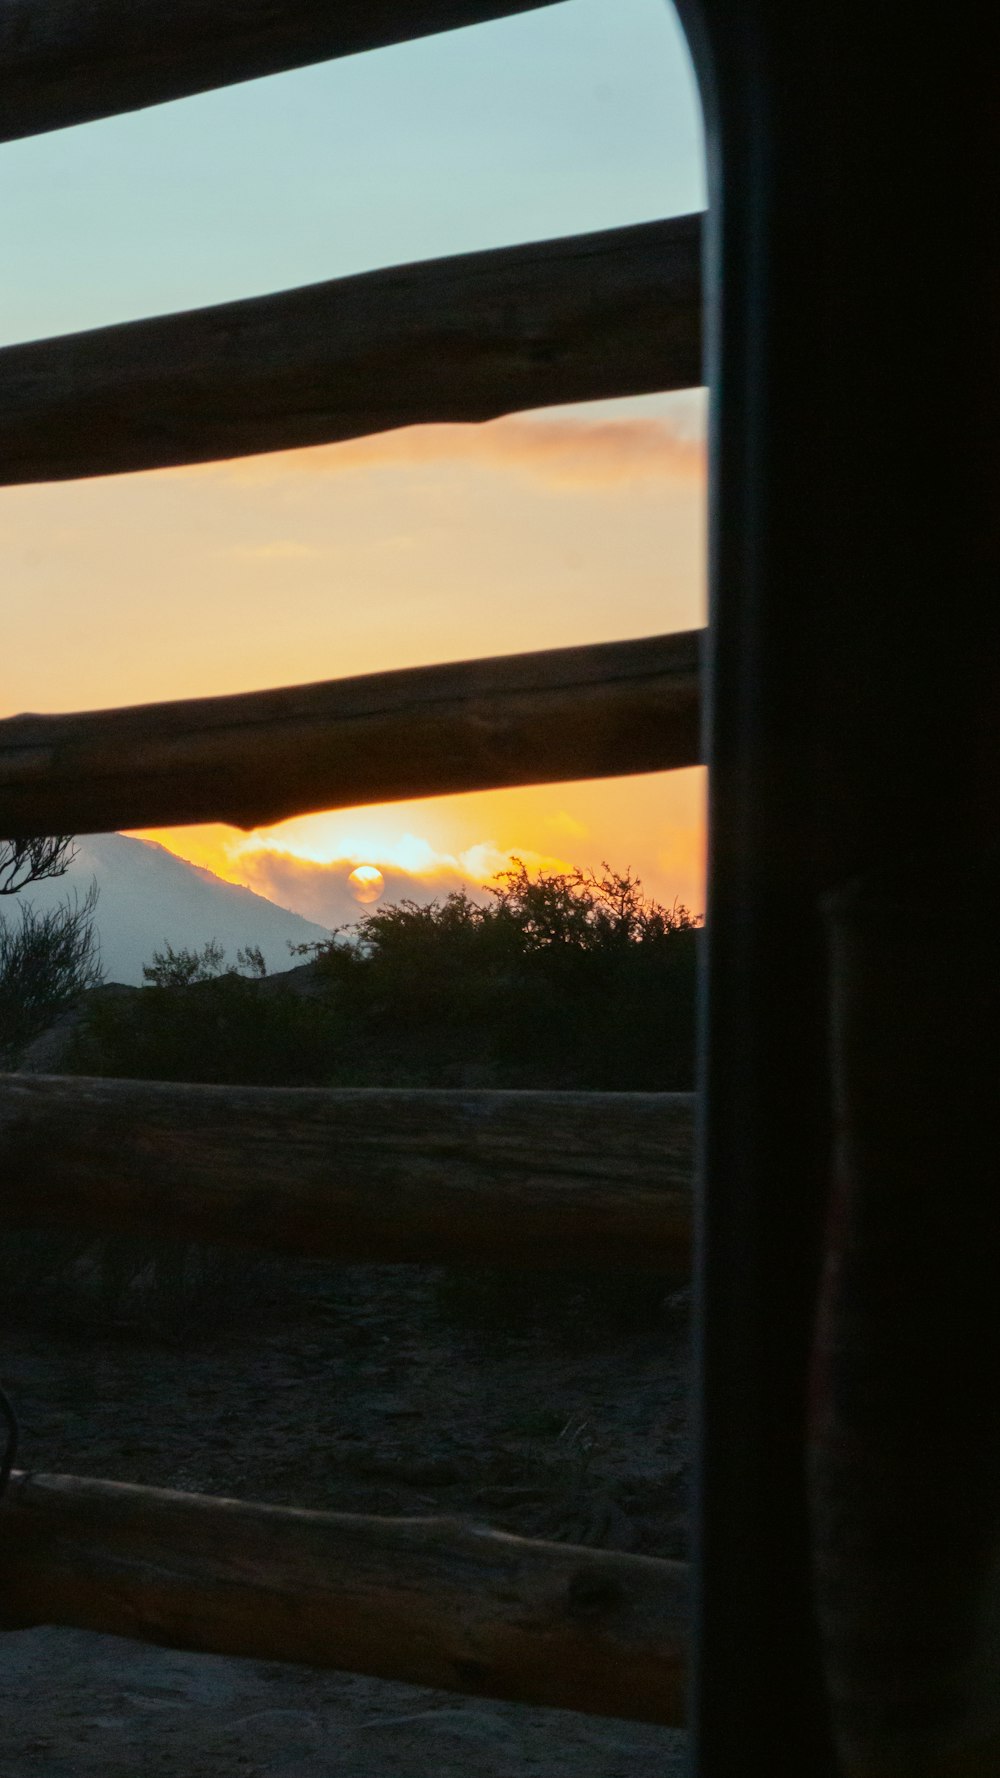 a view of a sunset through a window